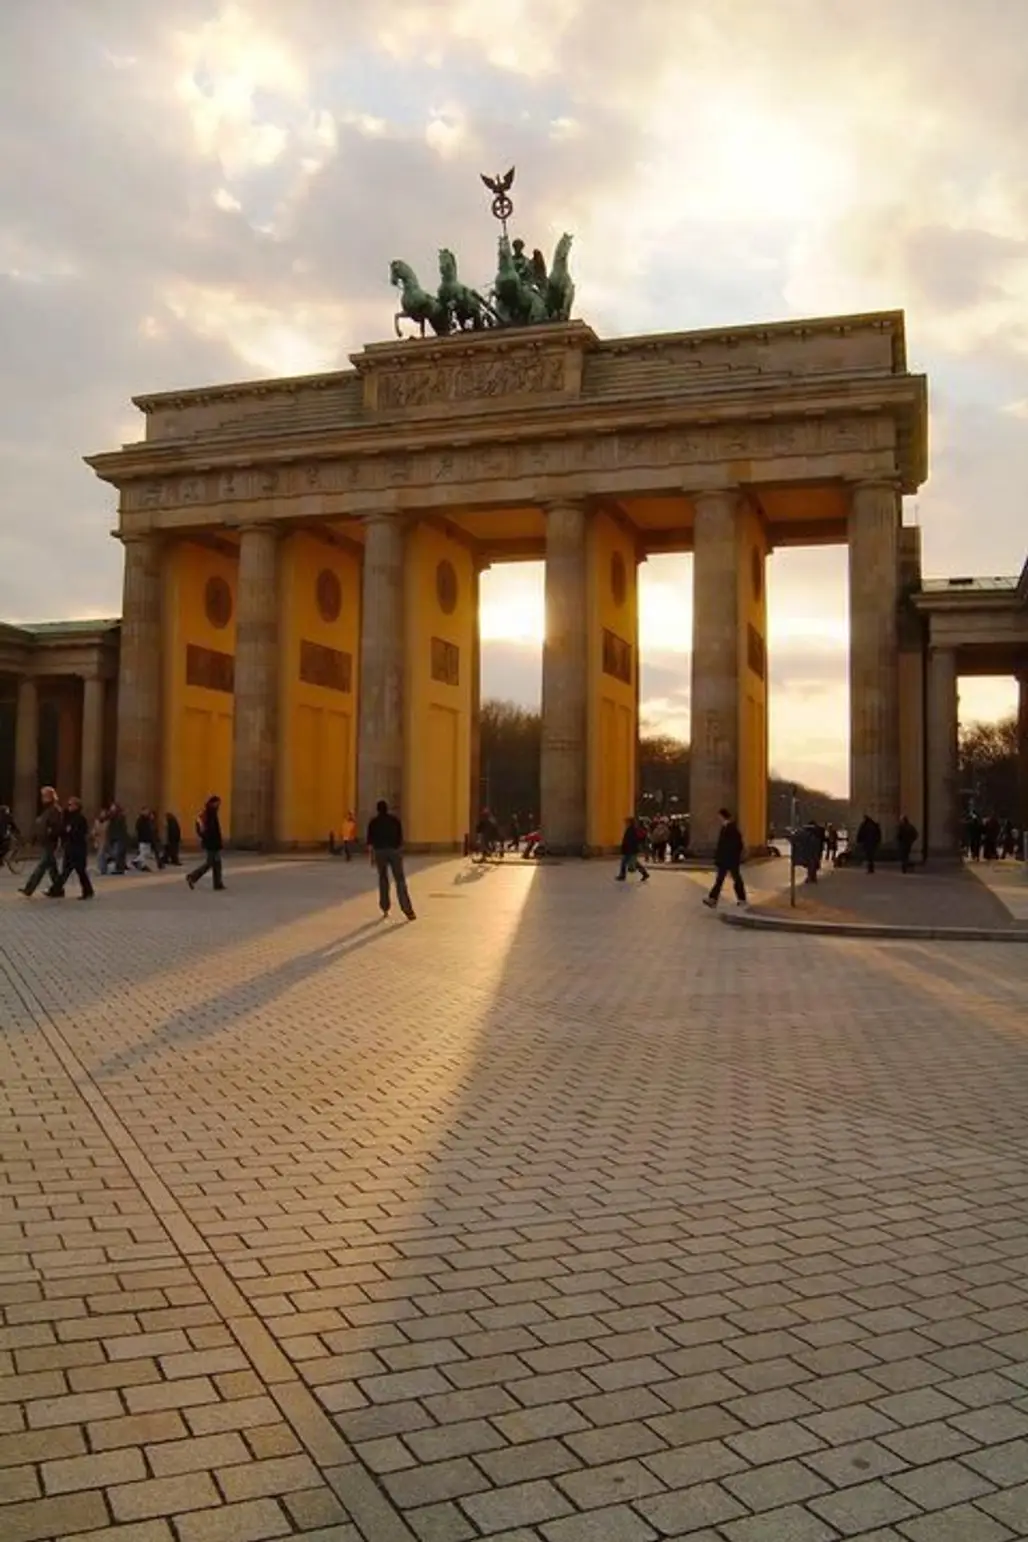 Be in Awe of the Brandenburg Gate